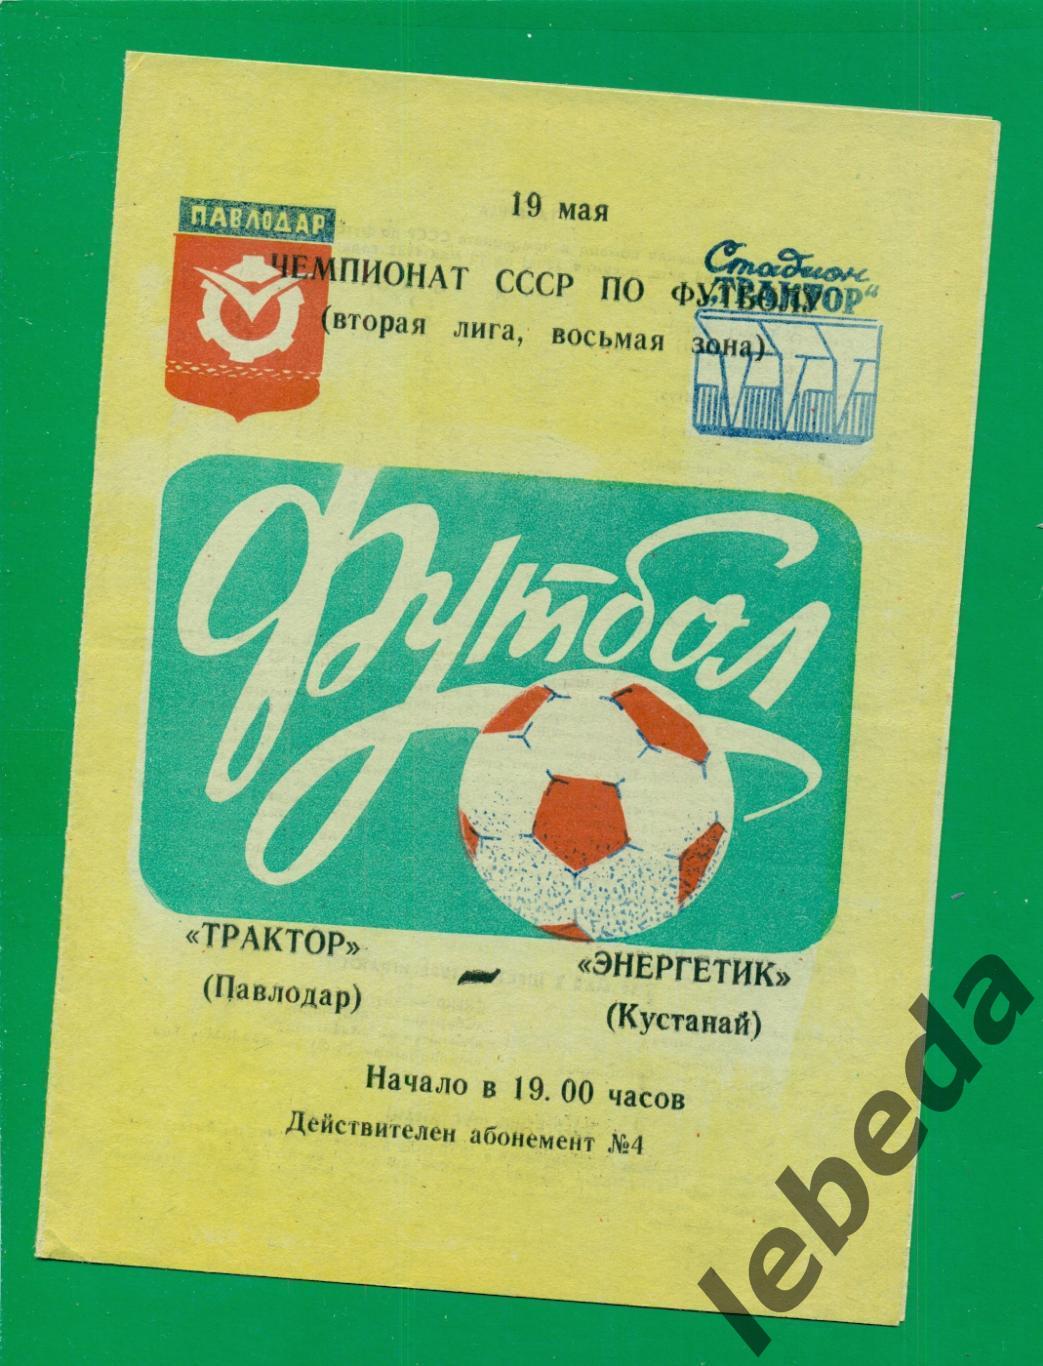 Трактор Павлодар - Энергетик Кустанай - 1982 г. (19.05.82.)